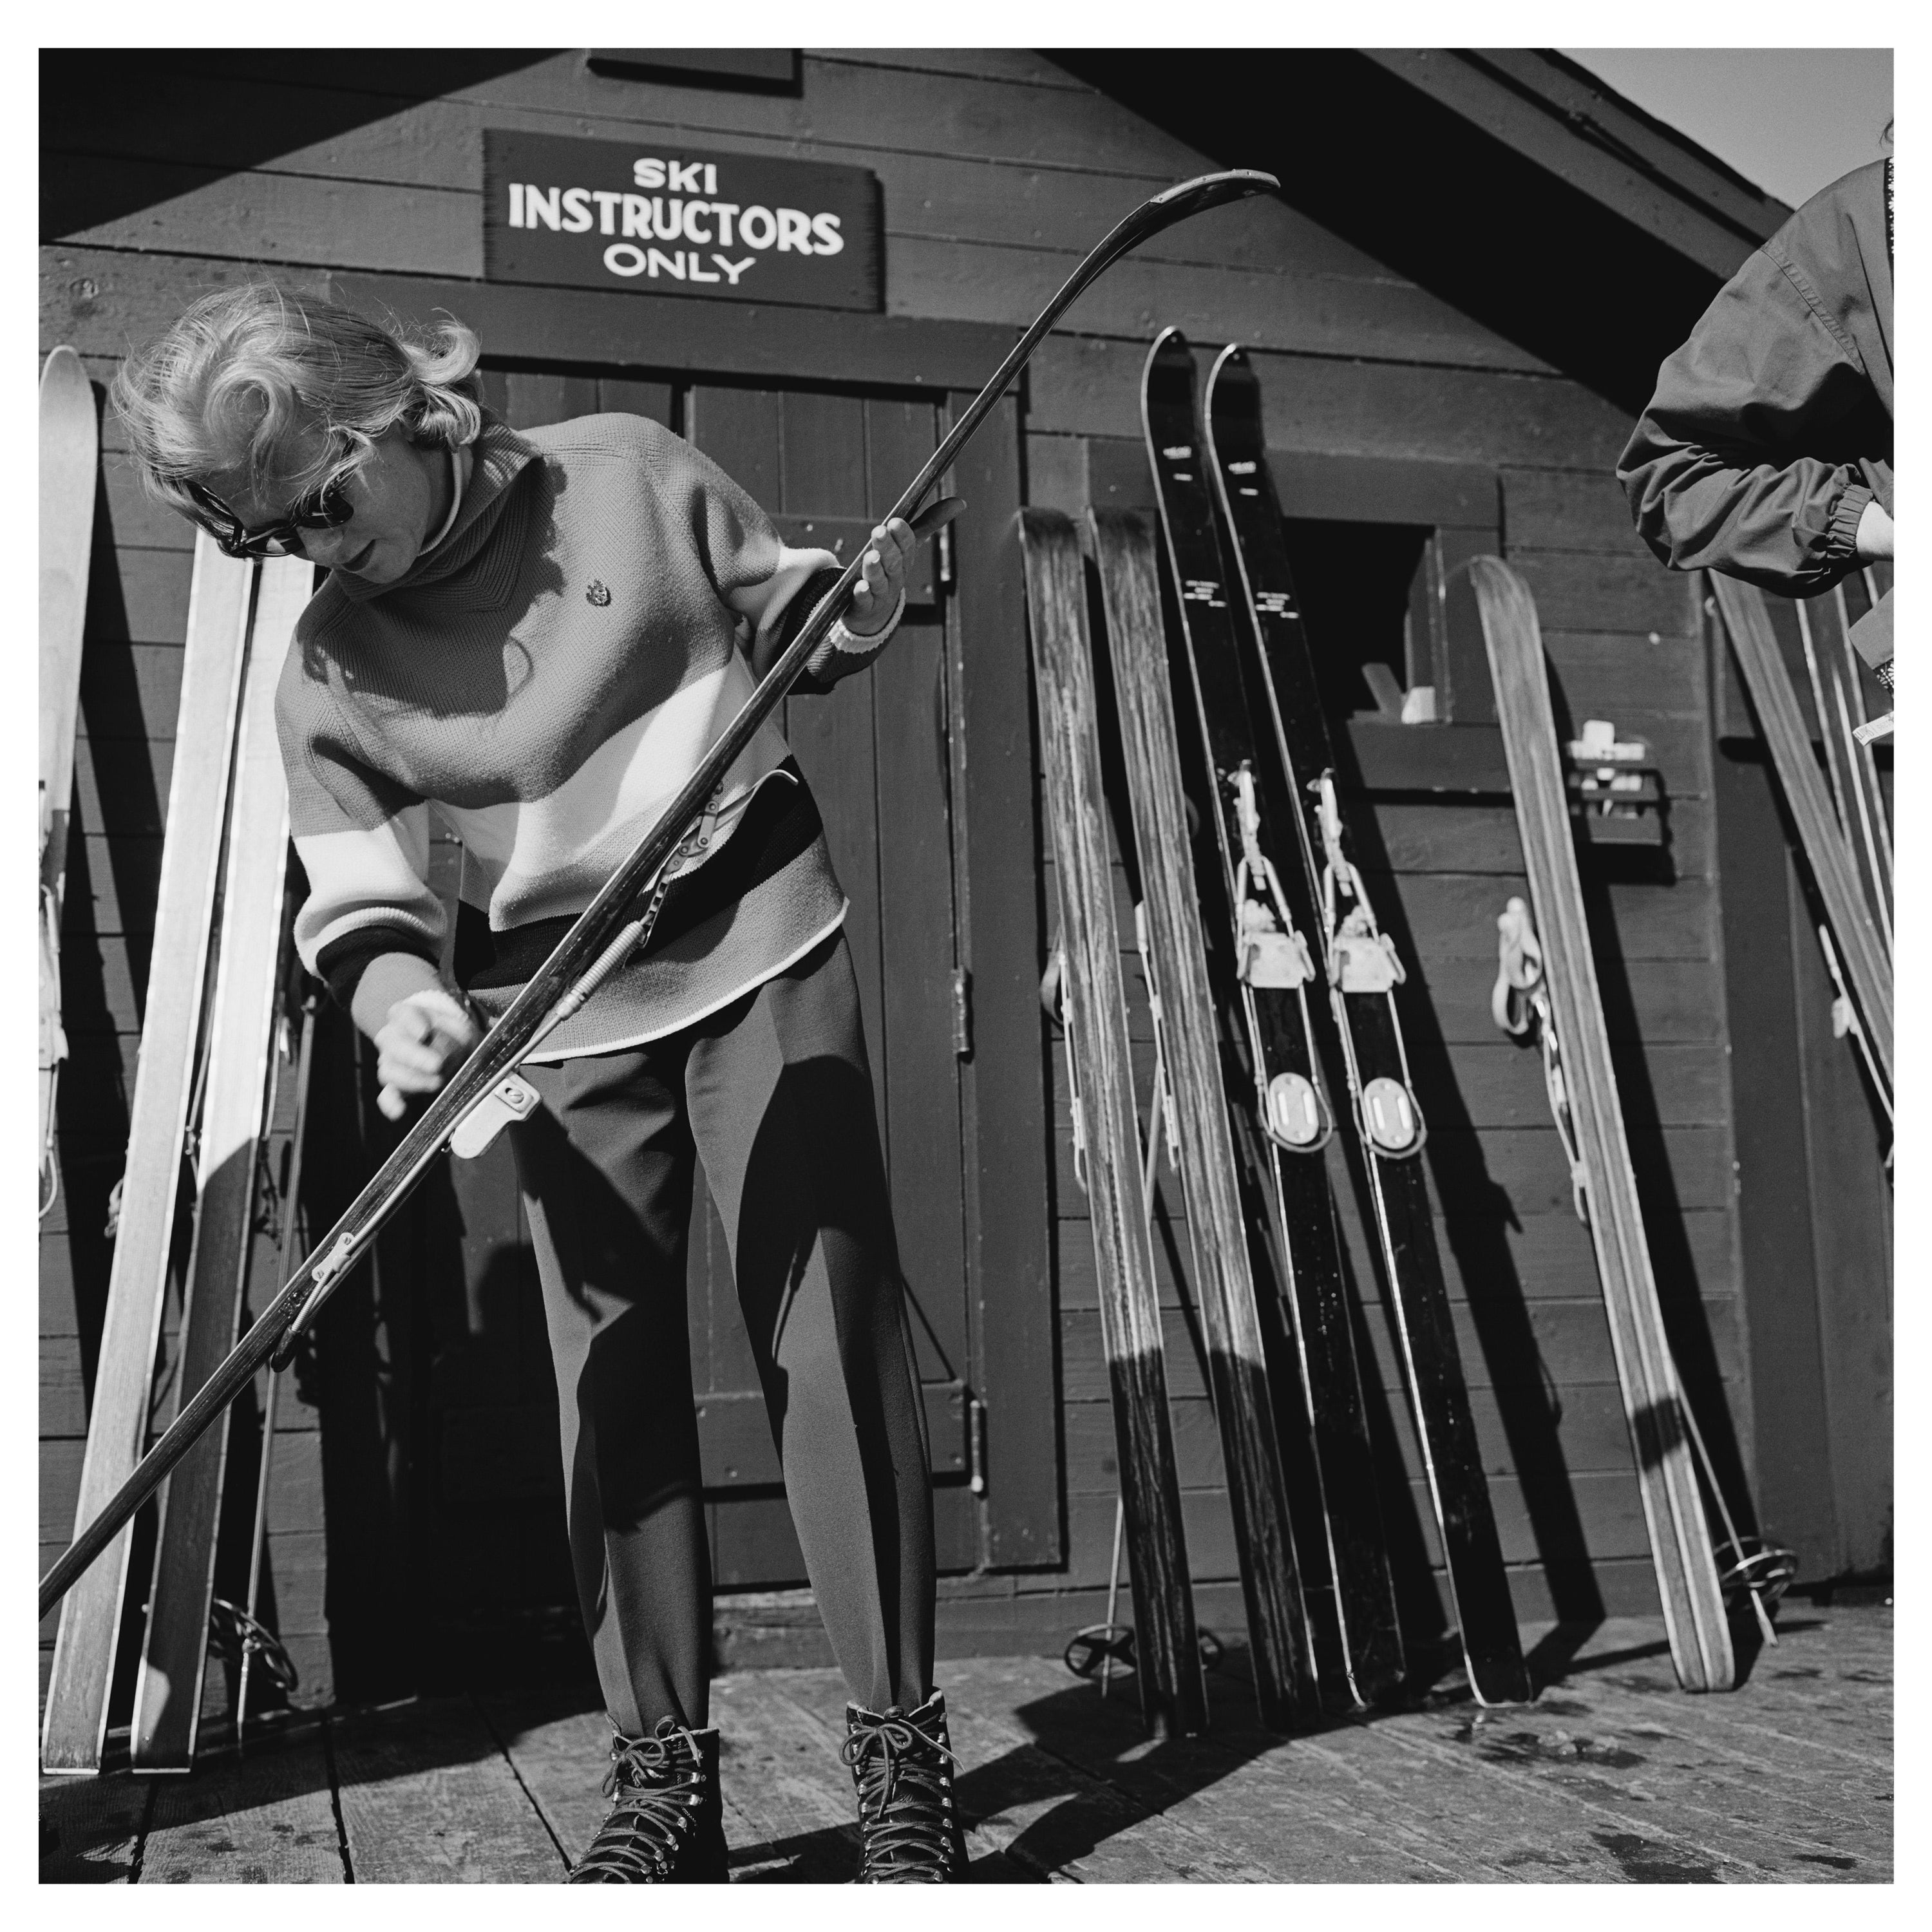 Slim Aarons Portrait Photograph - New England Skiing